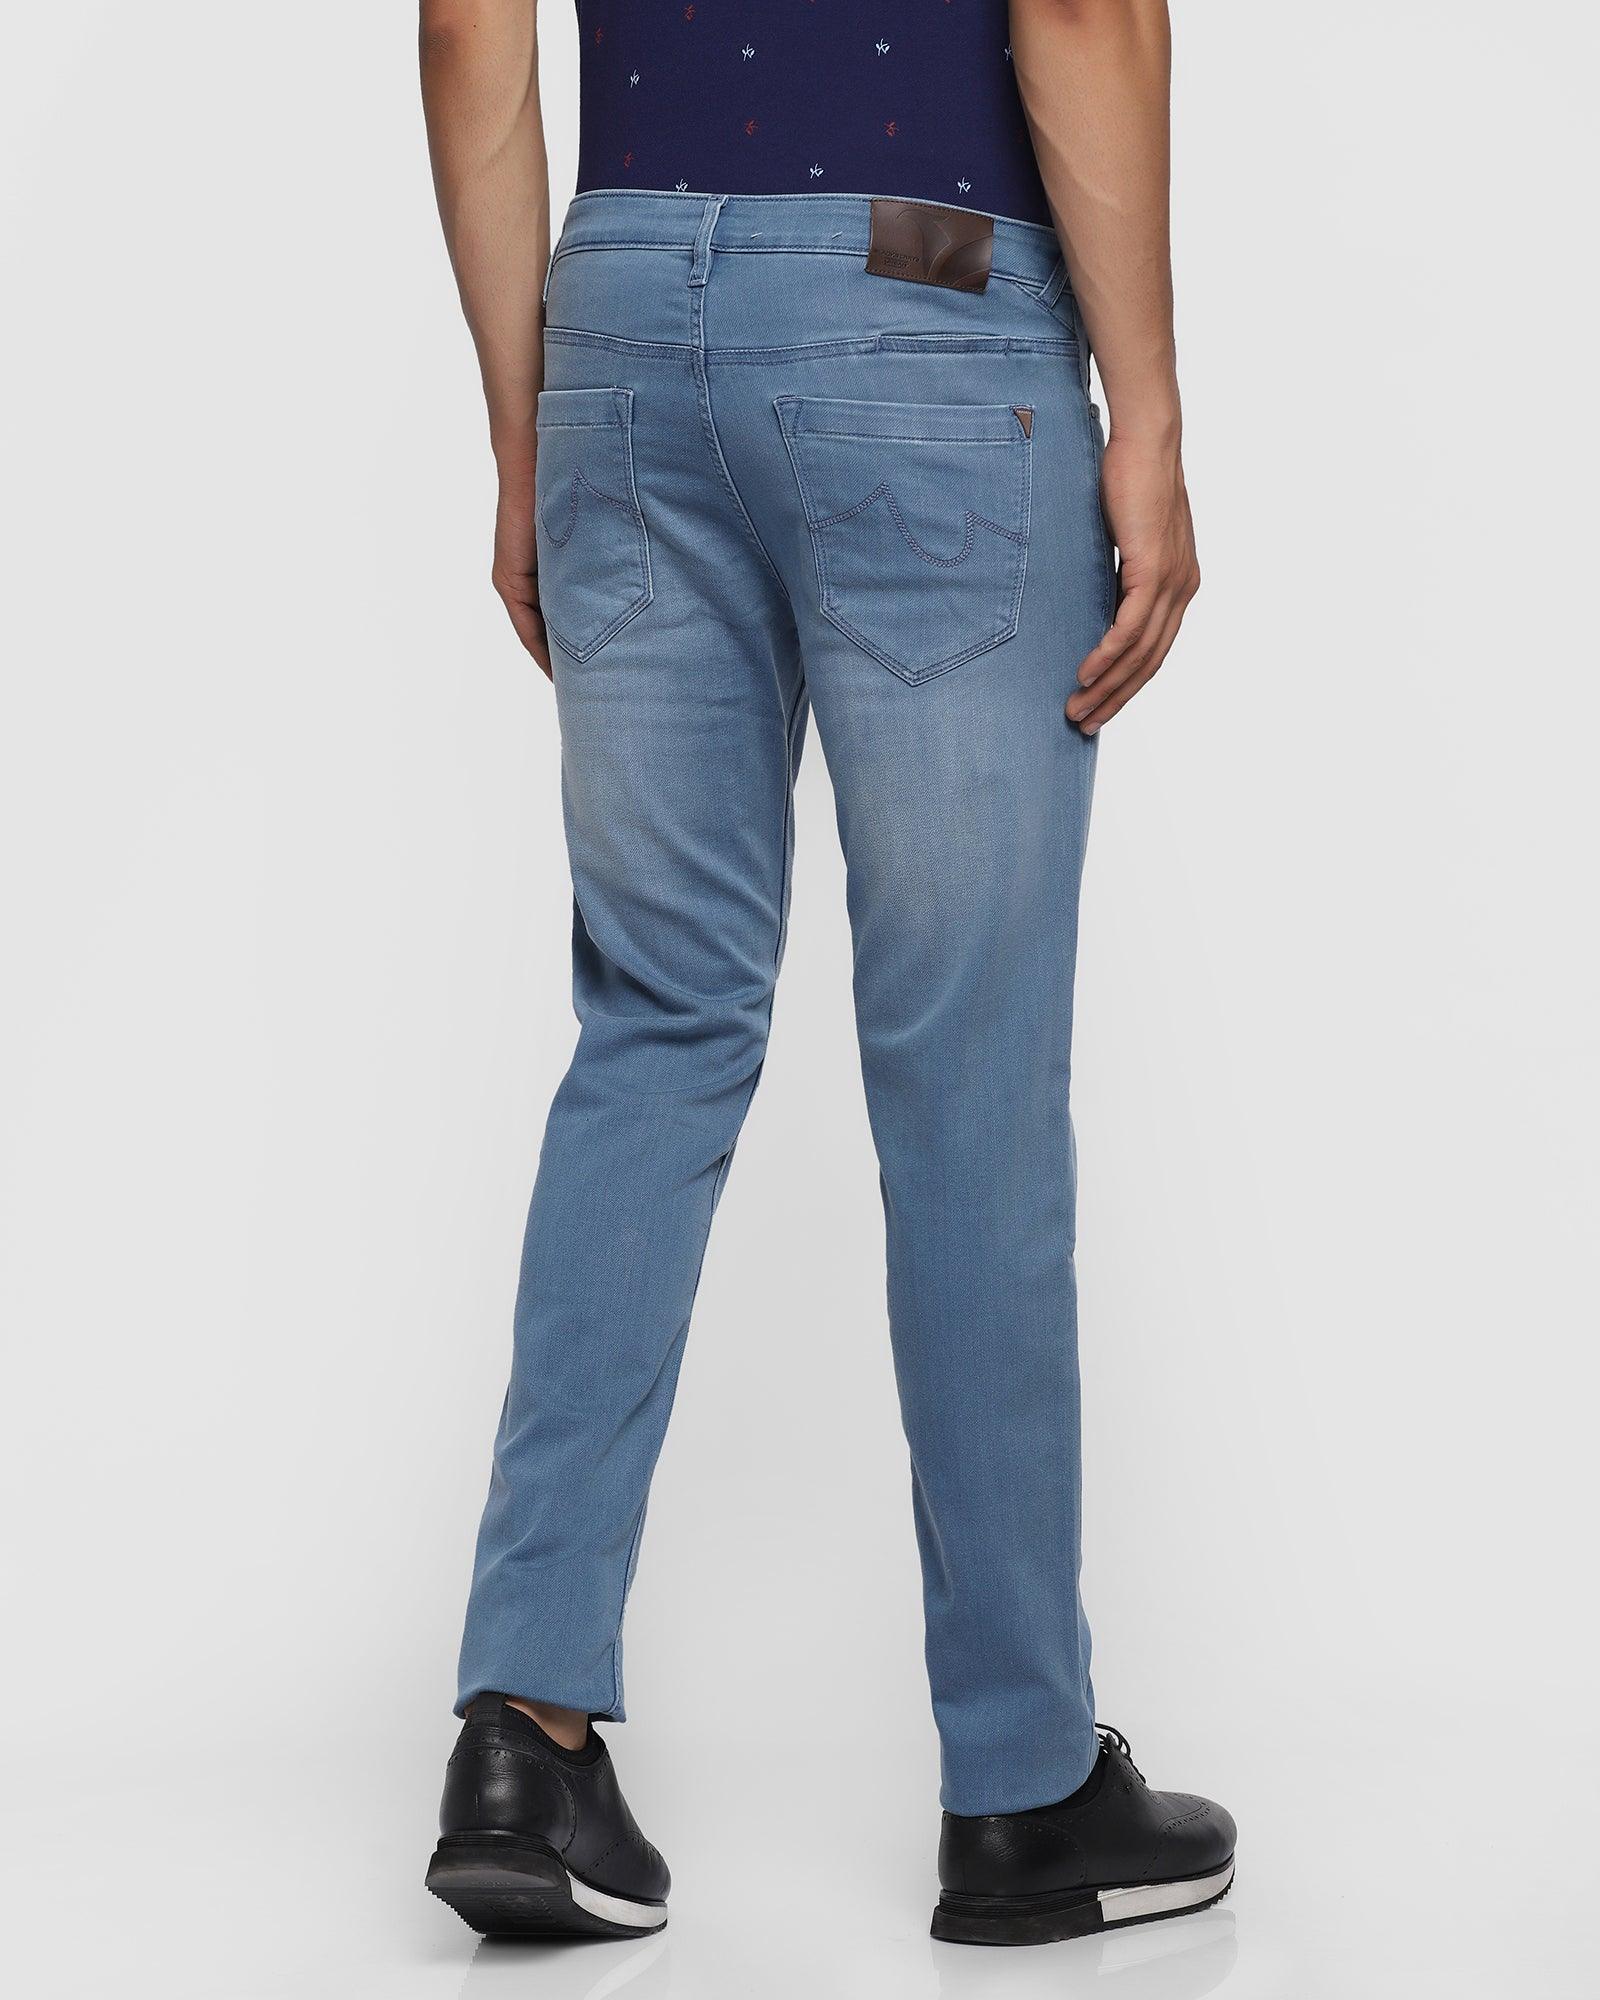 Super Clean Slim Yonk Fit Indigo Jeans - Thar